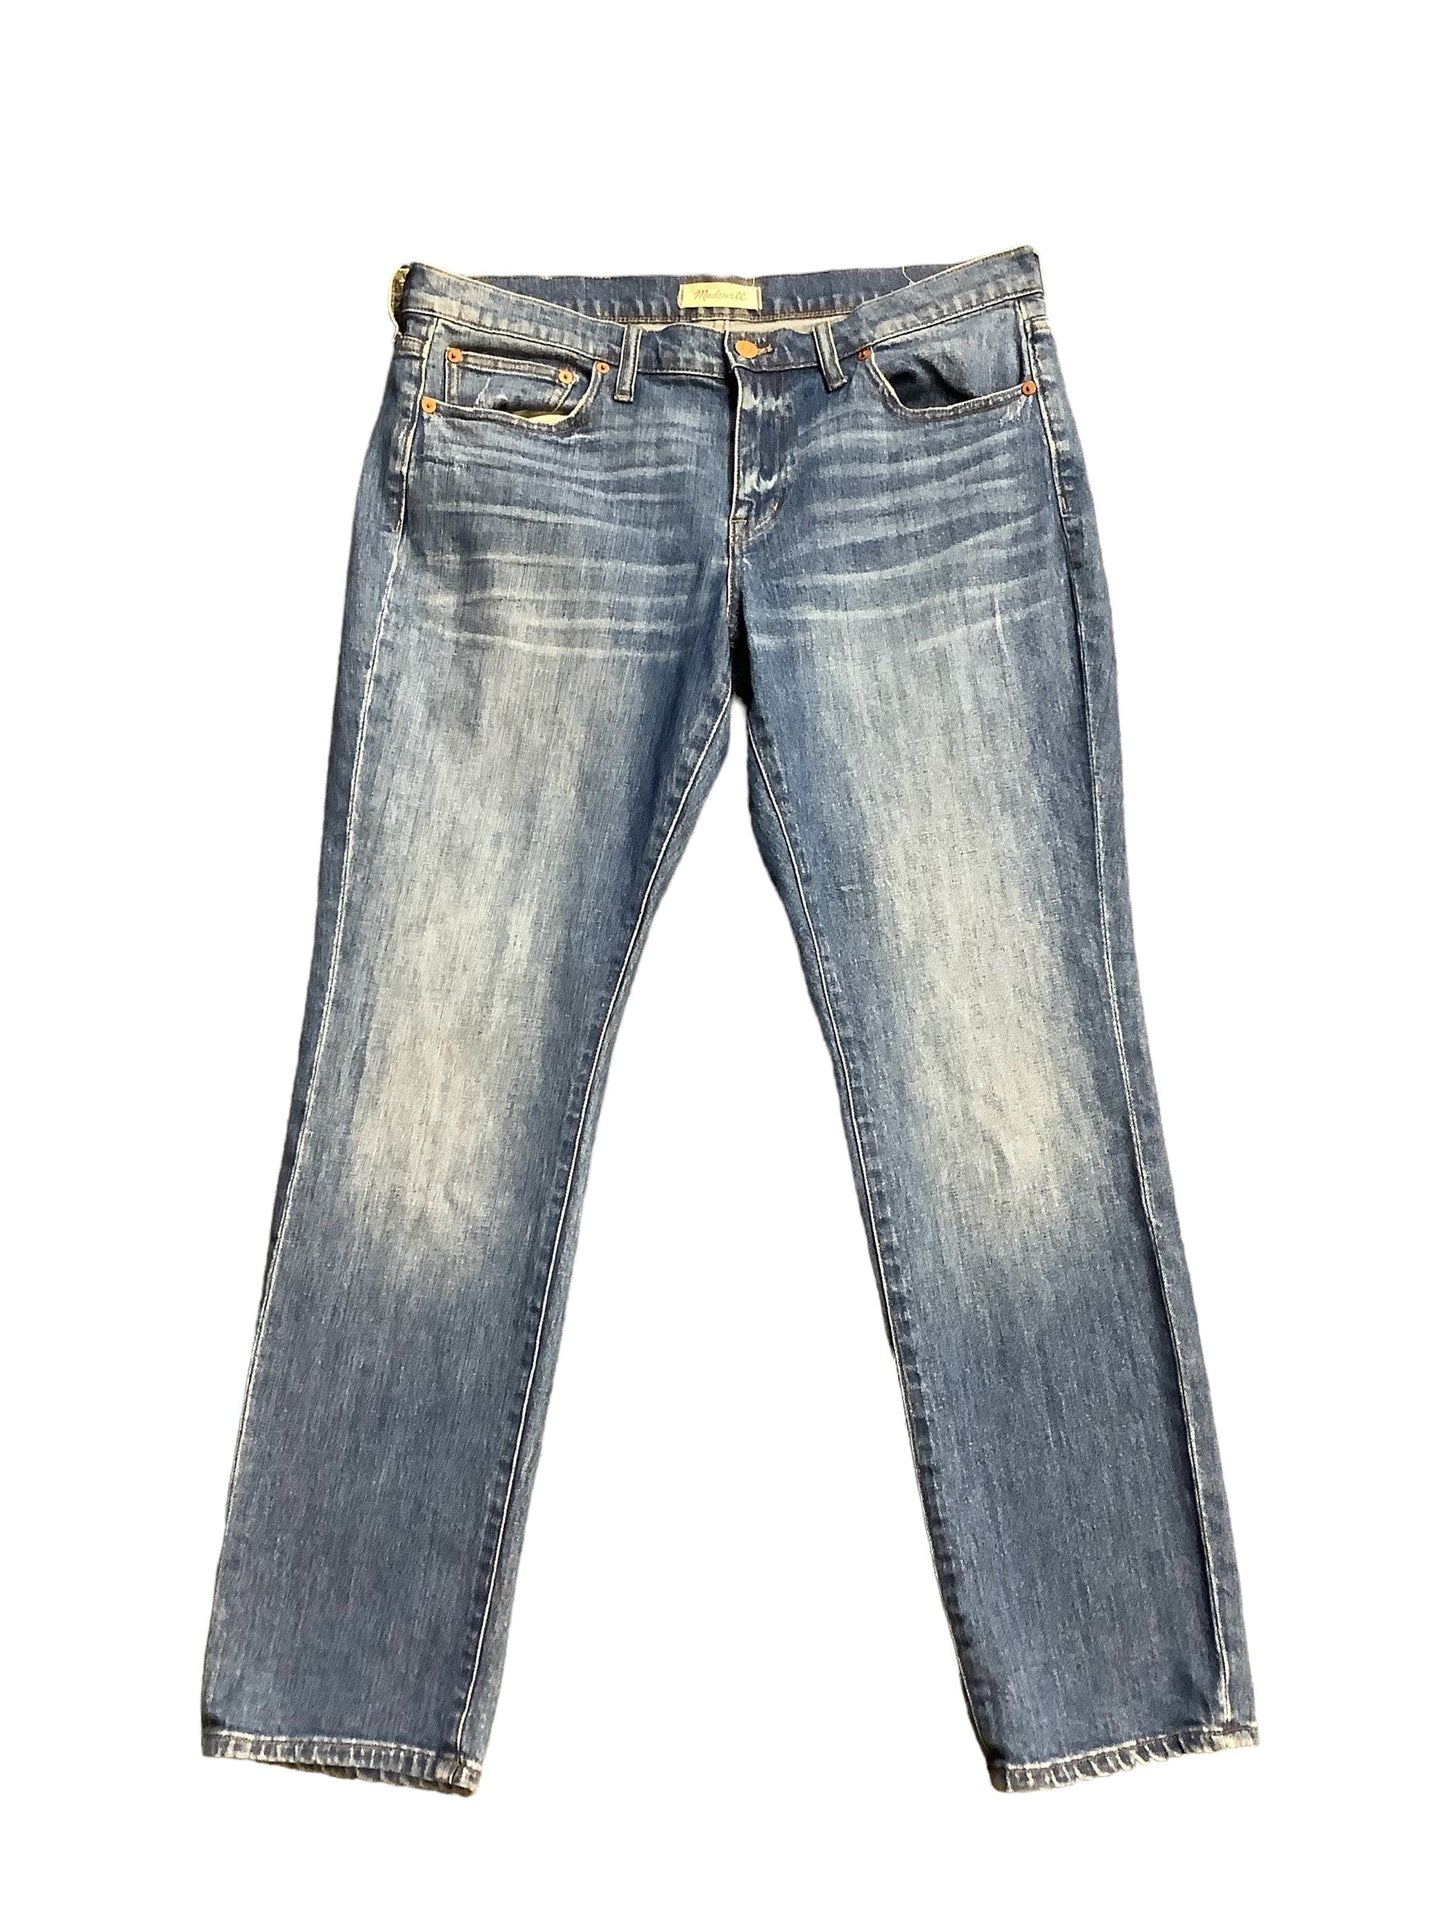 Denim Jeans Straight Madewell, Size 8